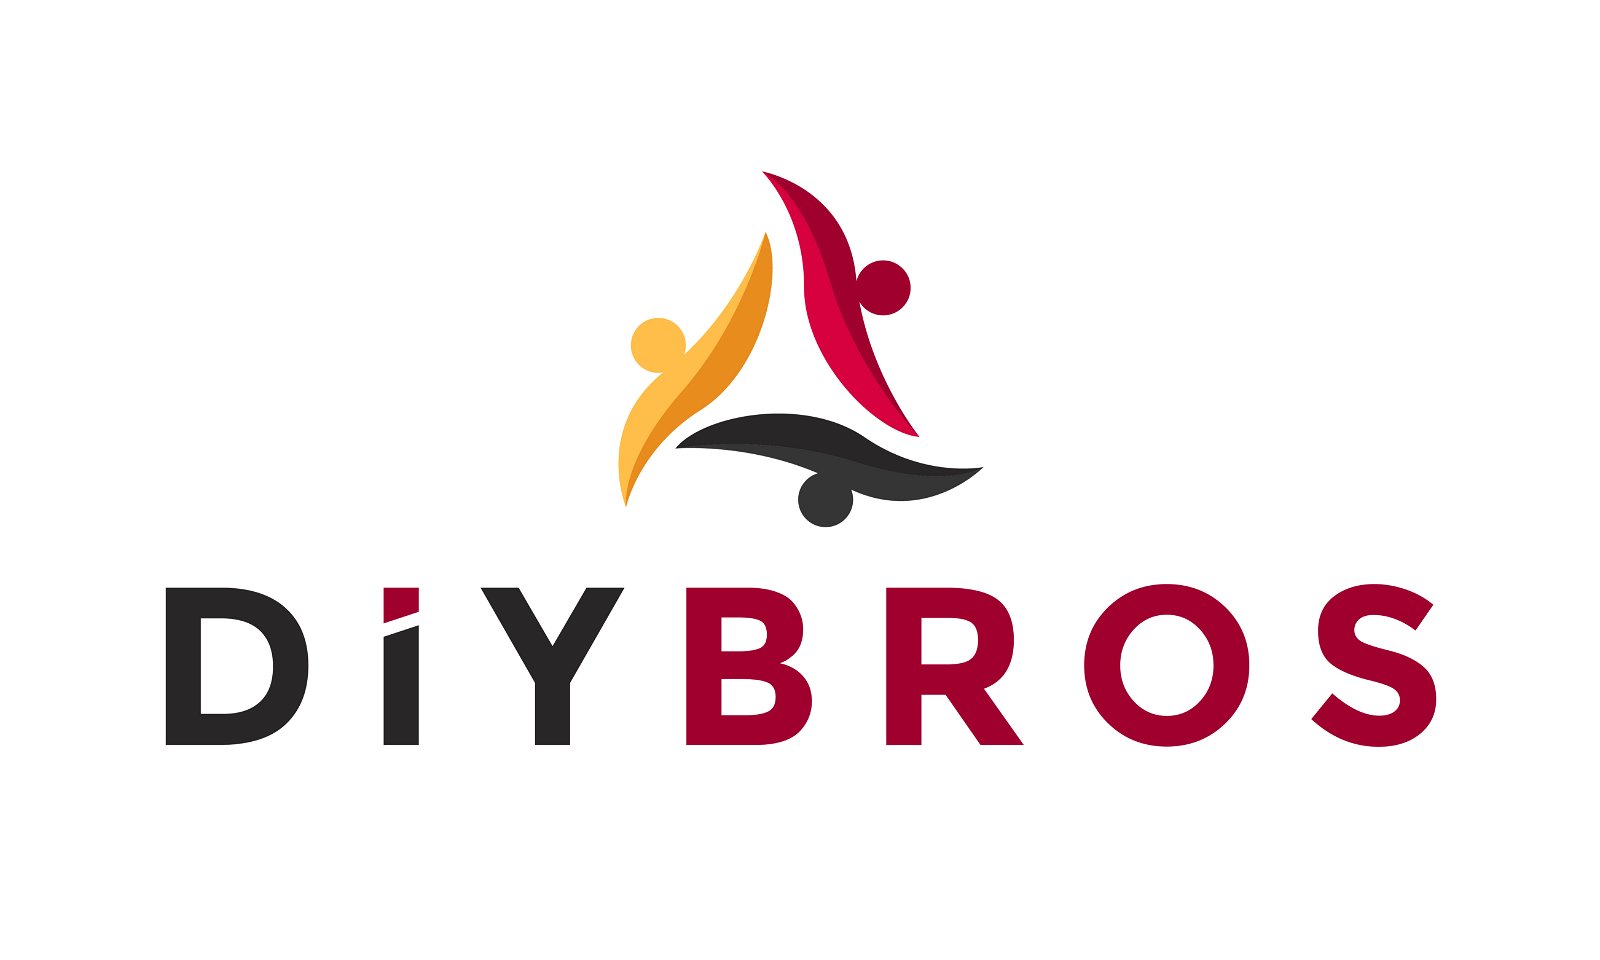 DiyBros.com - Creative brandable domain for sale